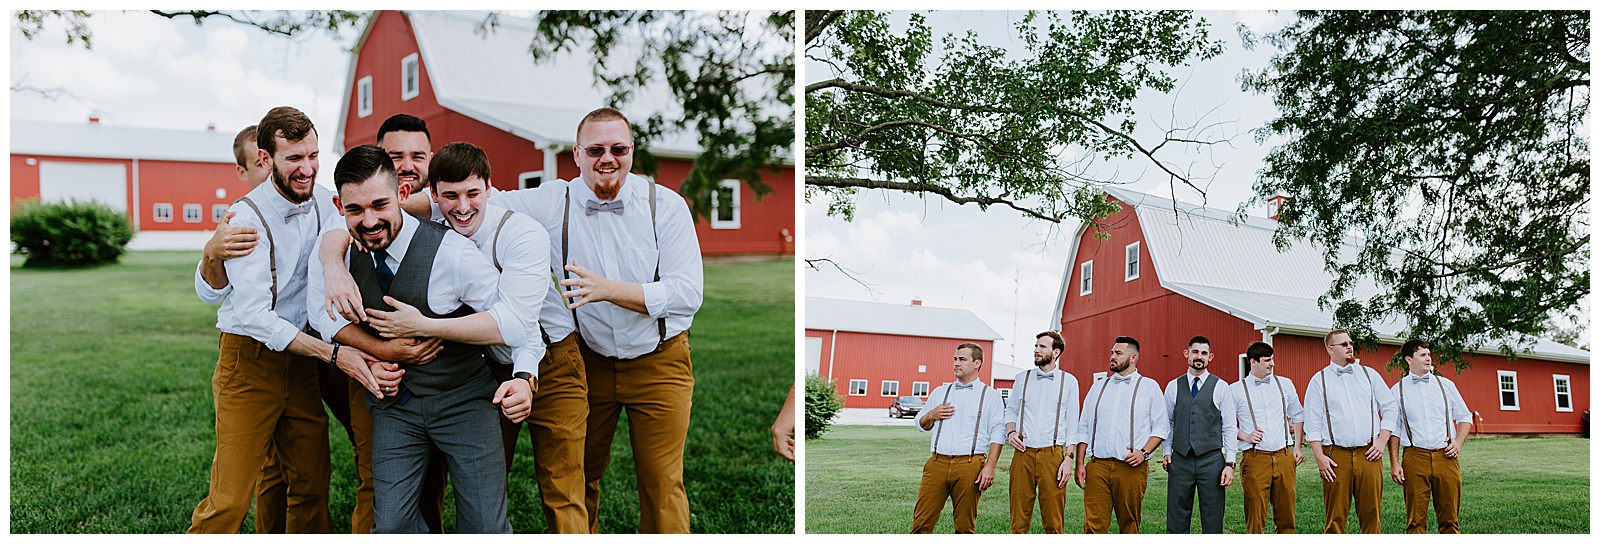 Groomsmen with suspenders, bowties, laughter, bohemian eclectic wedding